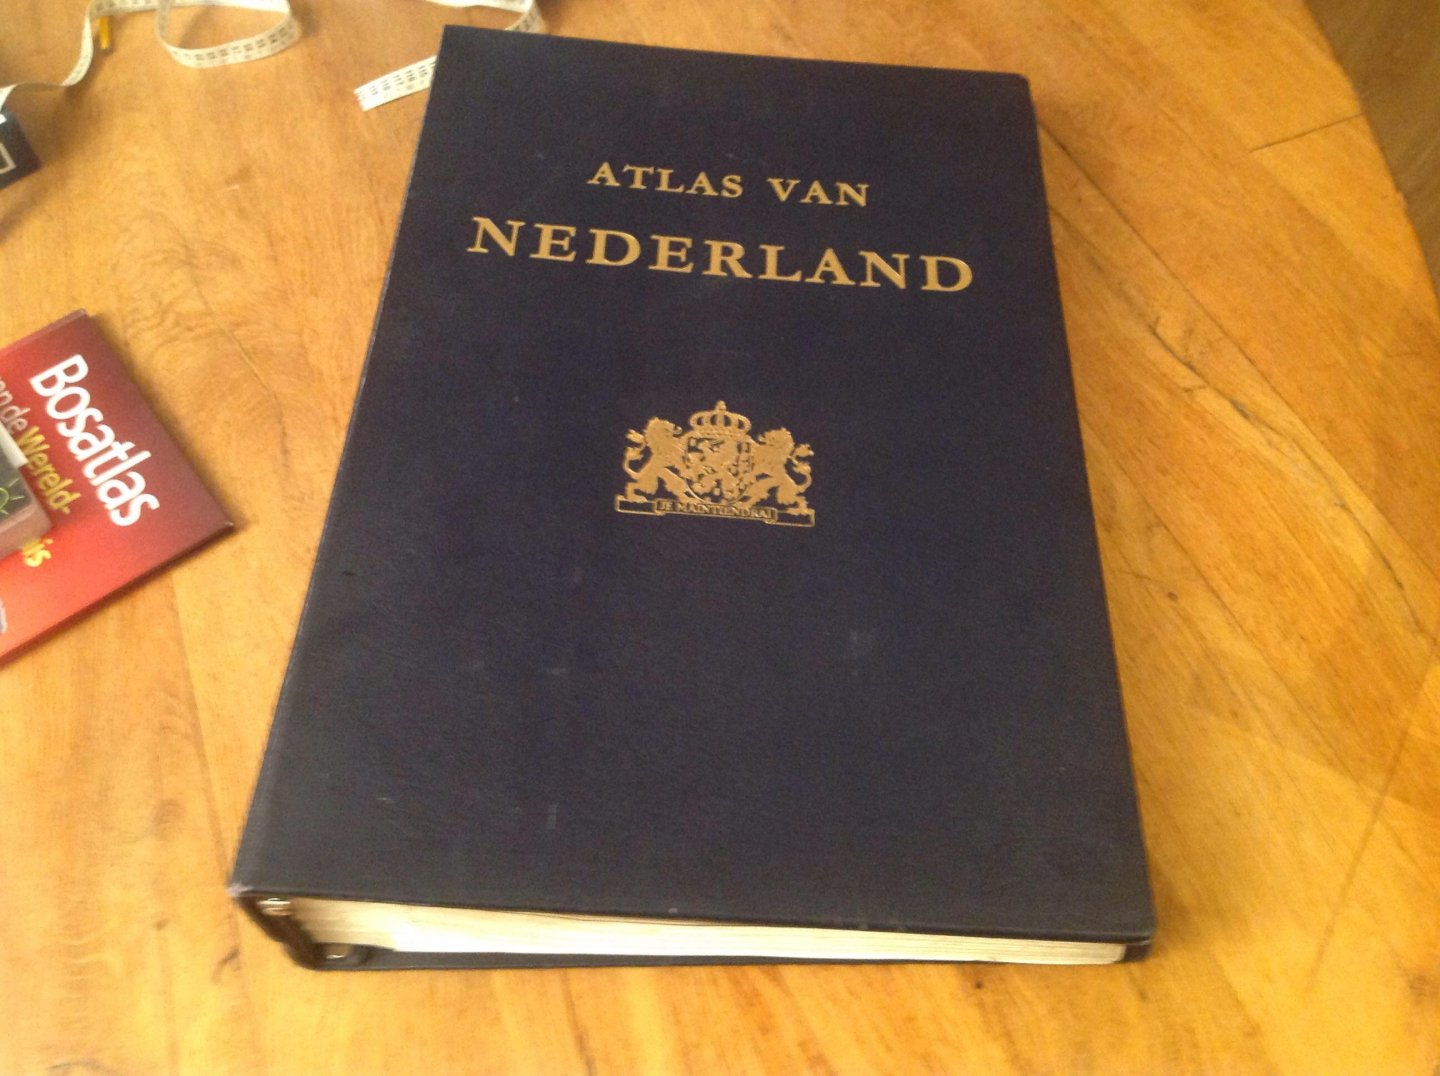  - Atlas van Nederland. Atlas of the Netherlands 1963-1977